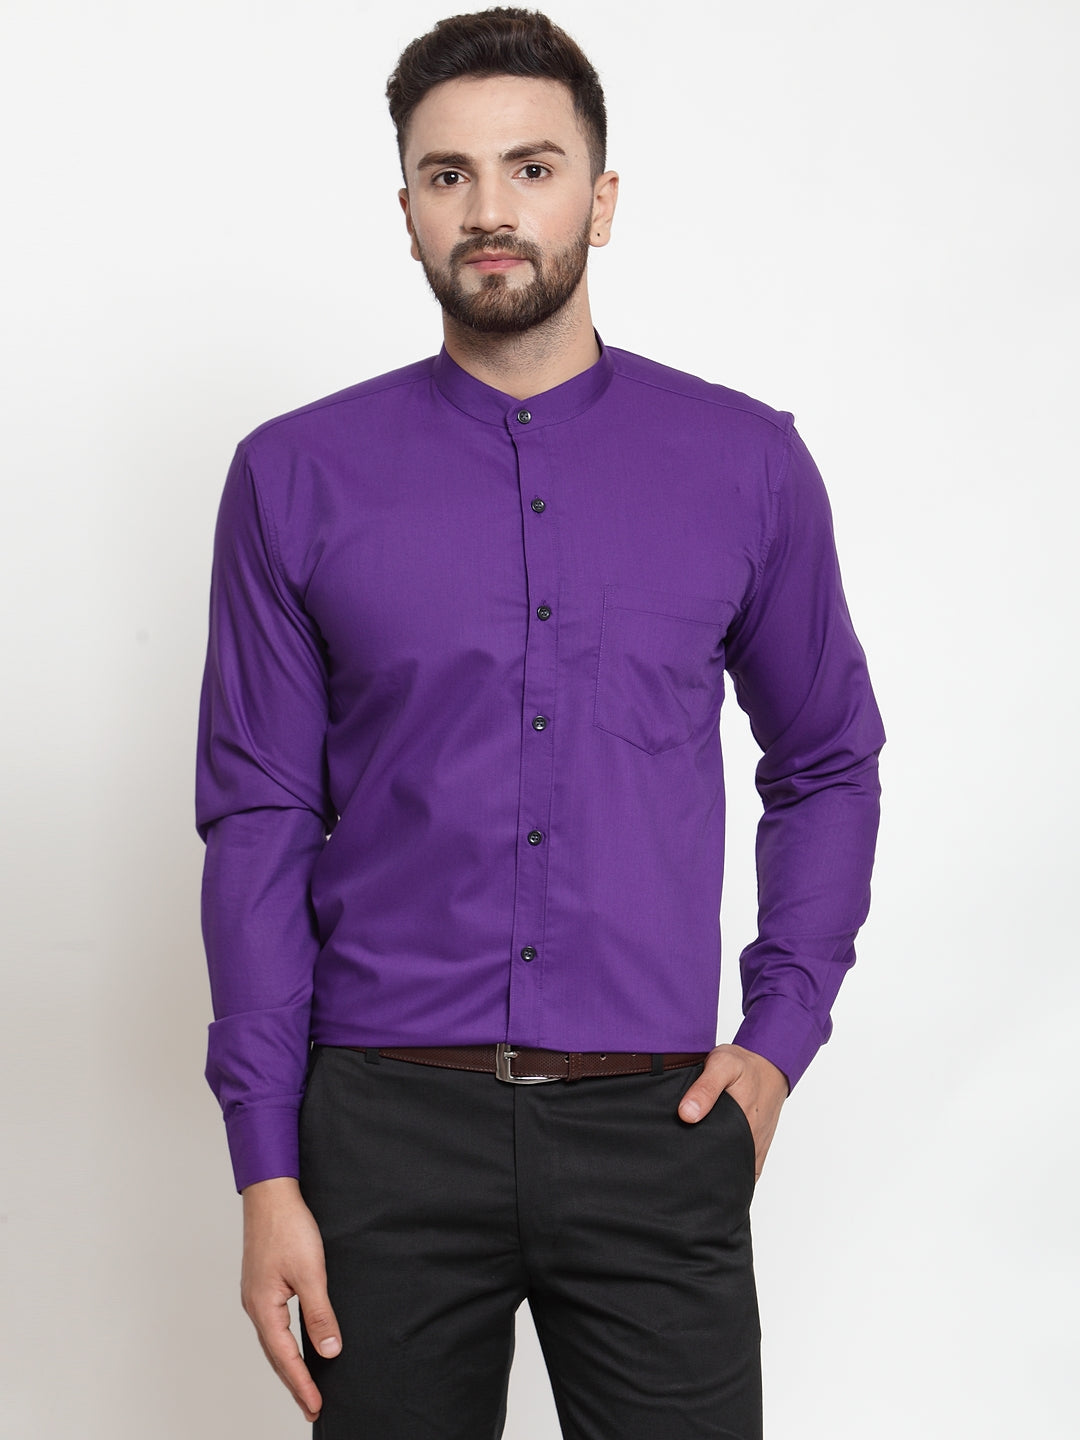 Men's Purple Cotton Solid Mandarin Collar Formal Shirts ( SF 726Purple ) - Jainish